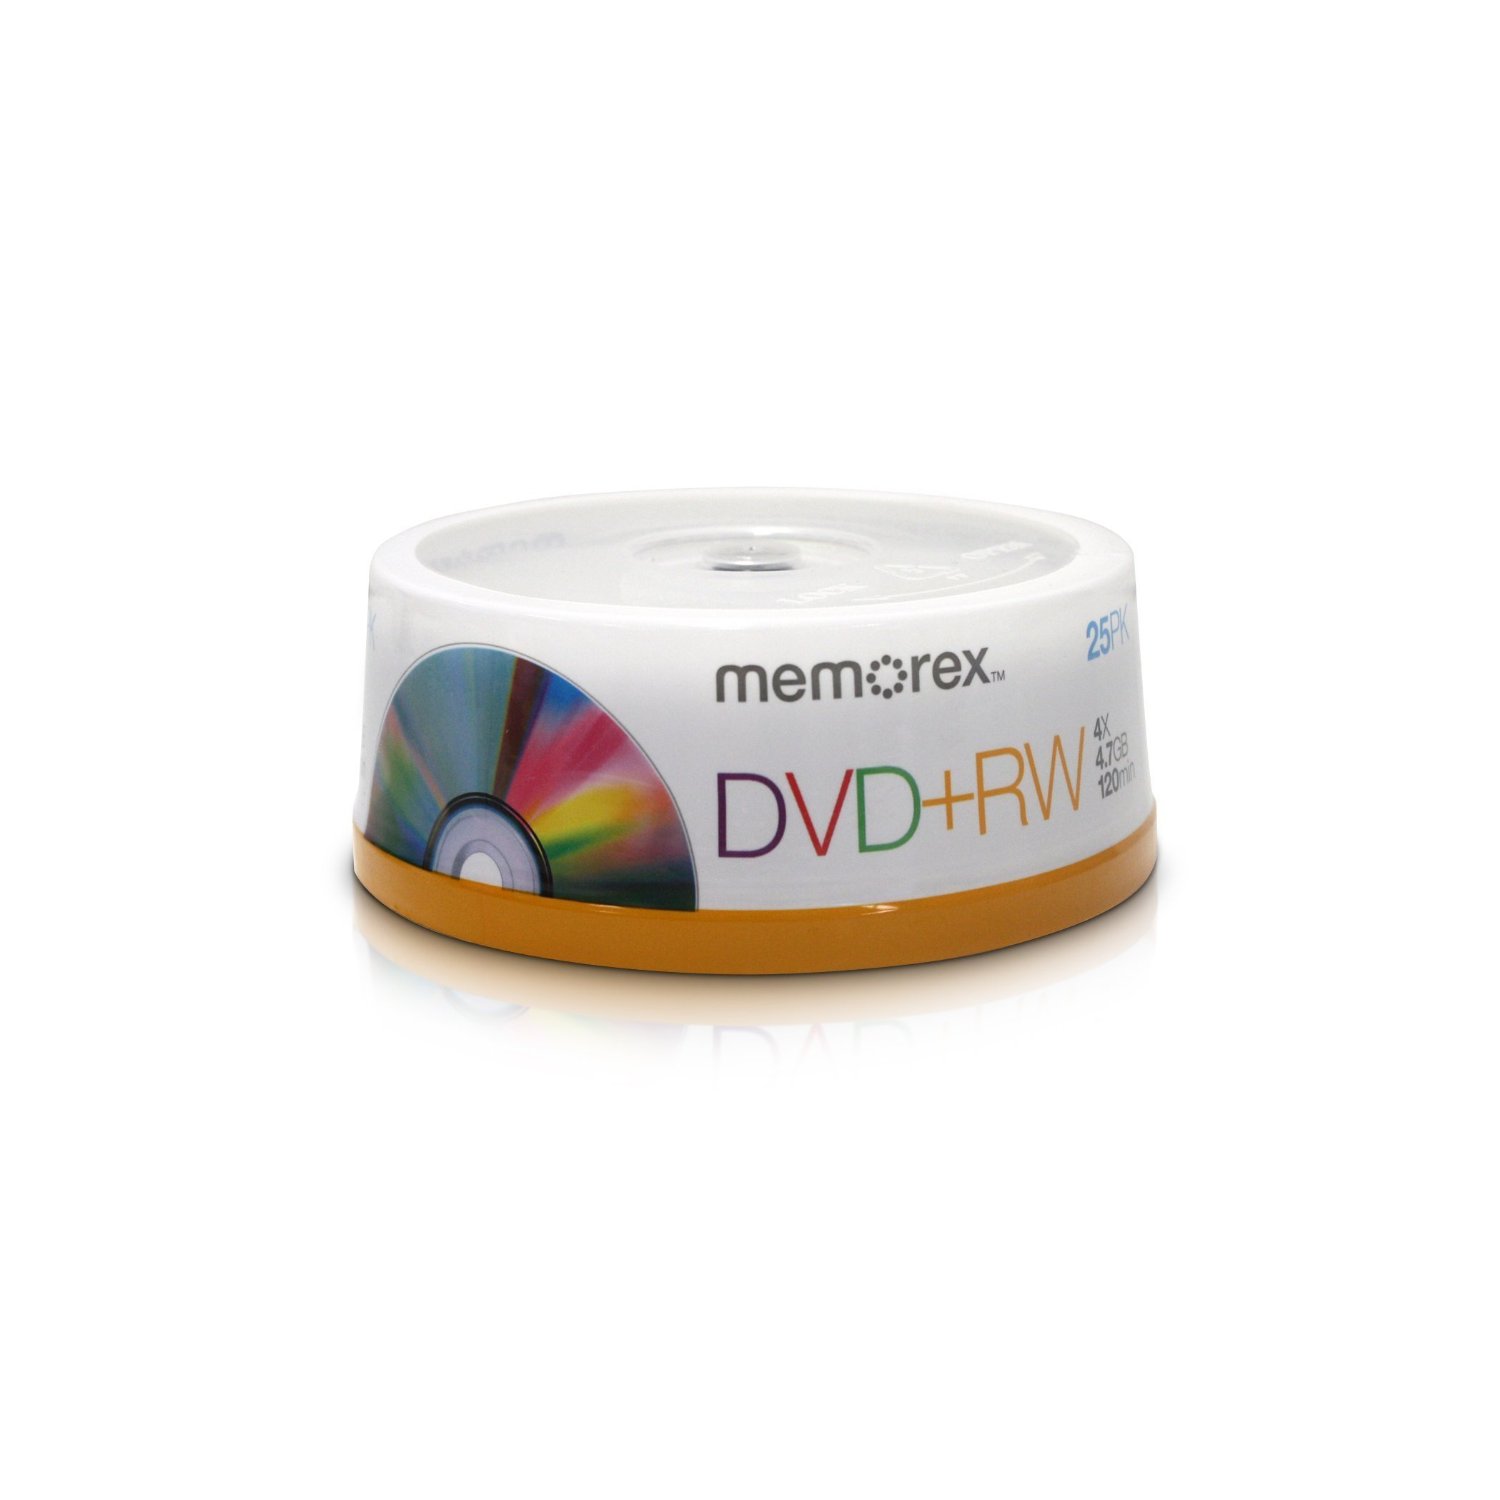 Memorex 32025541 4x DVD+RW 25 Pack Spindle. 4.7 GB per disc